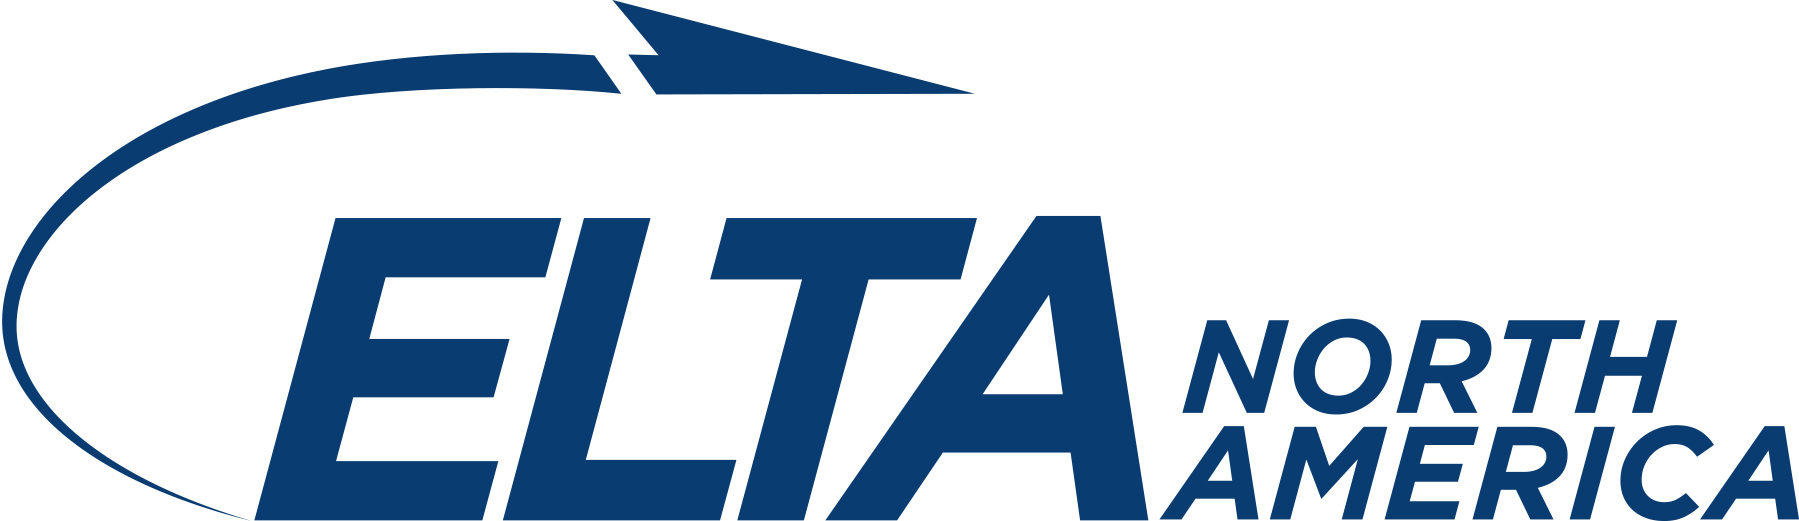 ELTA North America Company Logo